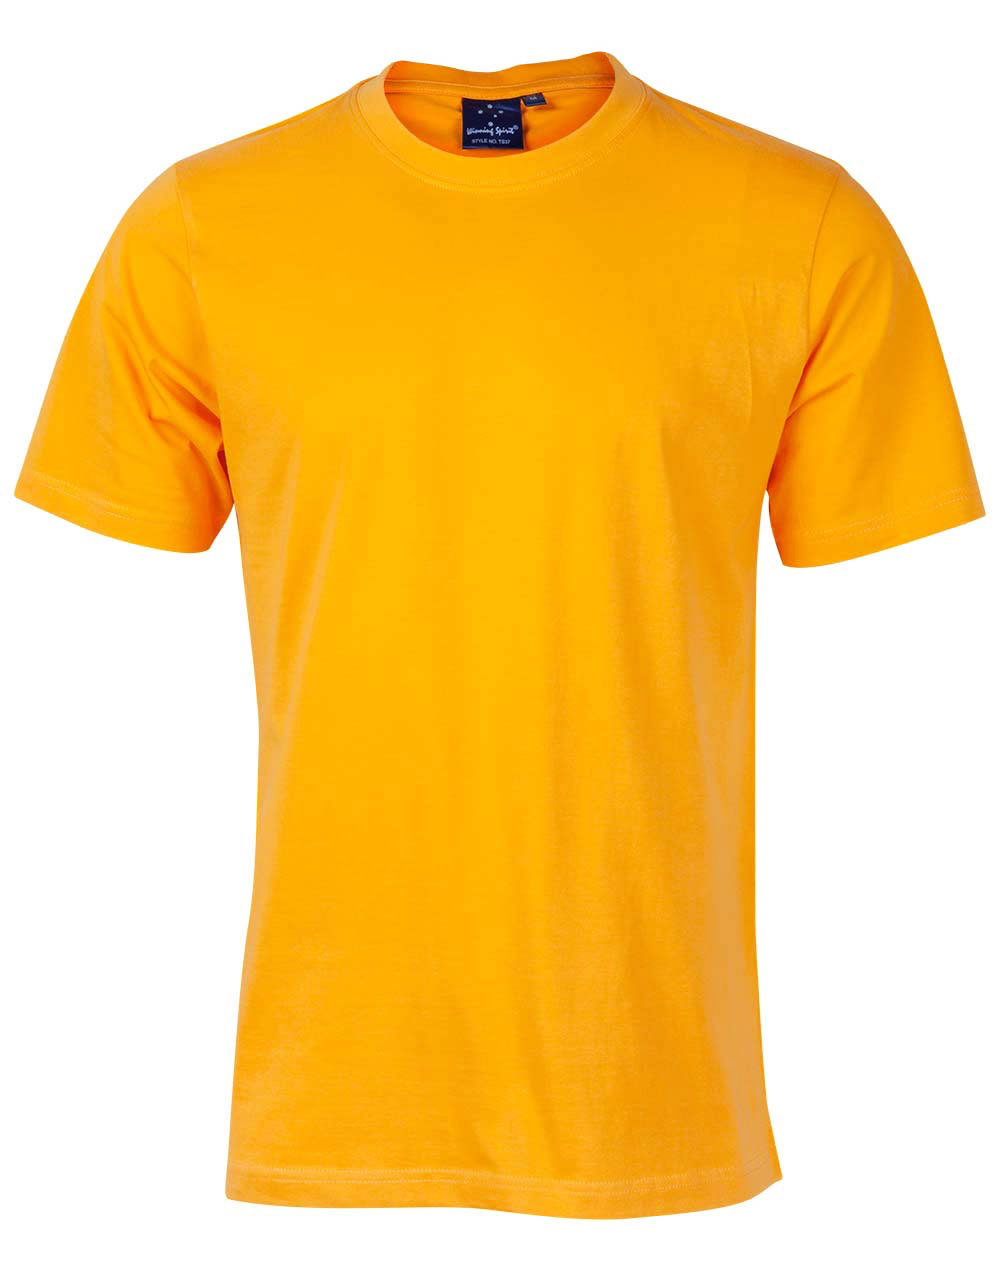 Custom (Grey) Semi-Fitted T-Shirts Men's Online in Perh Australia